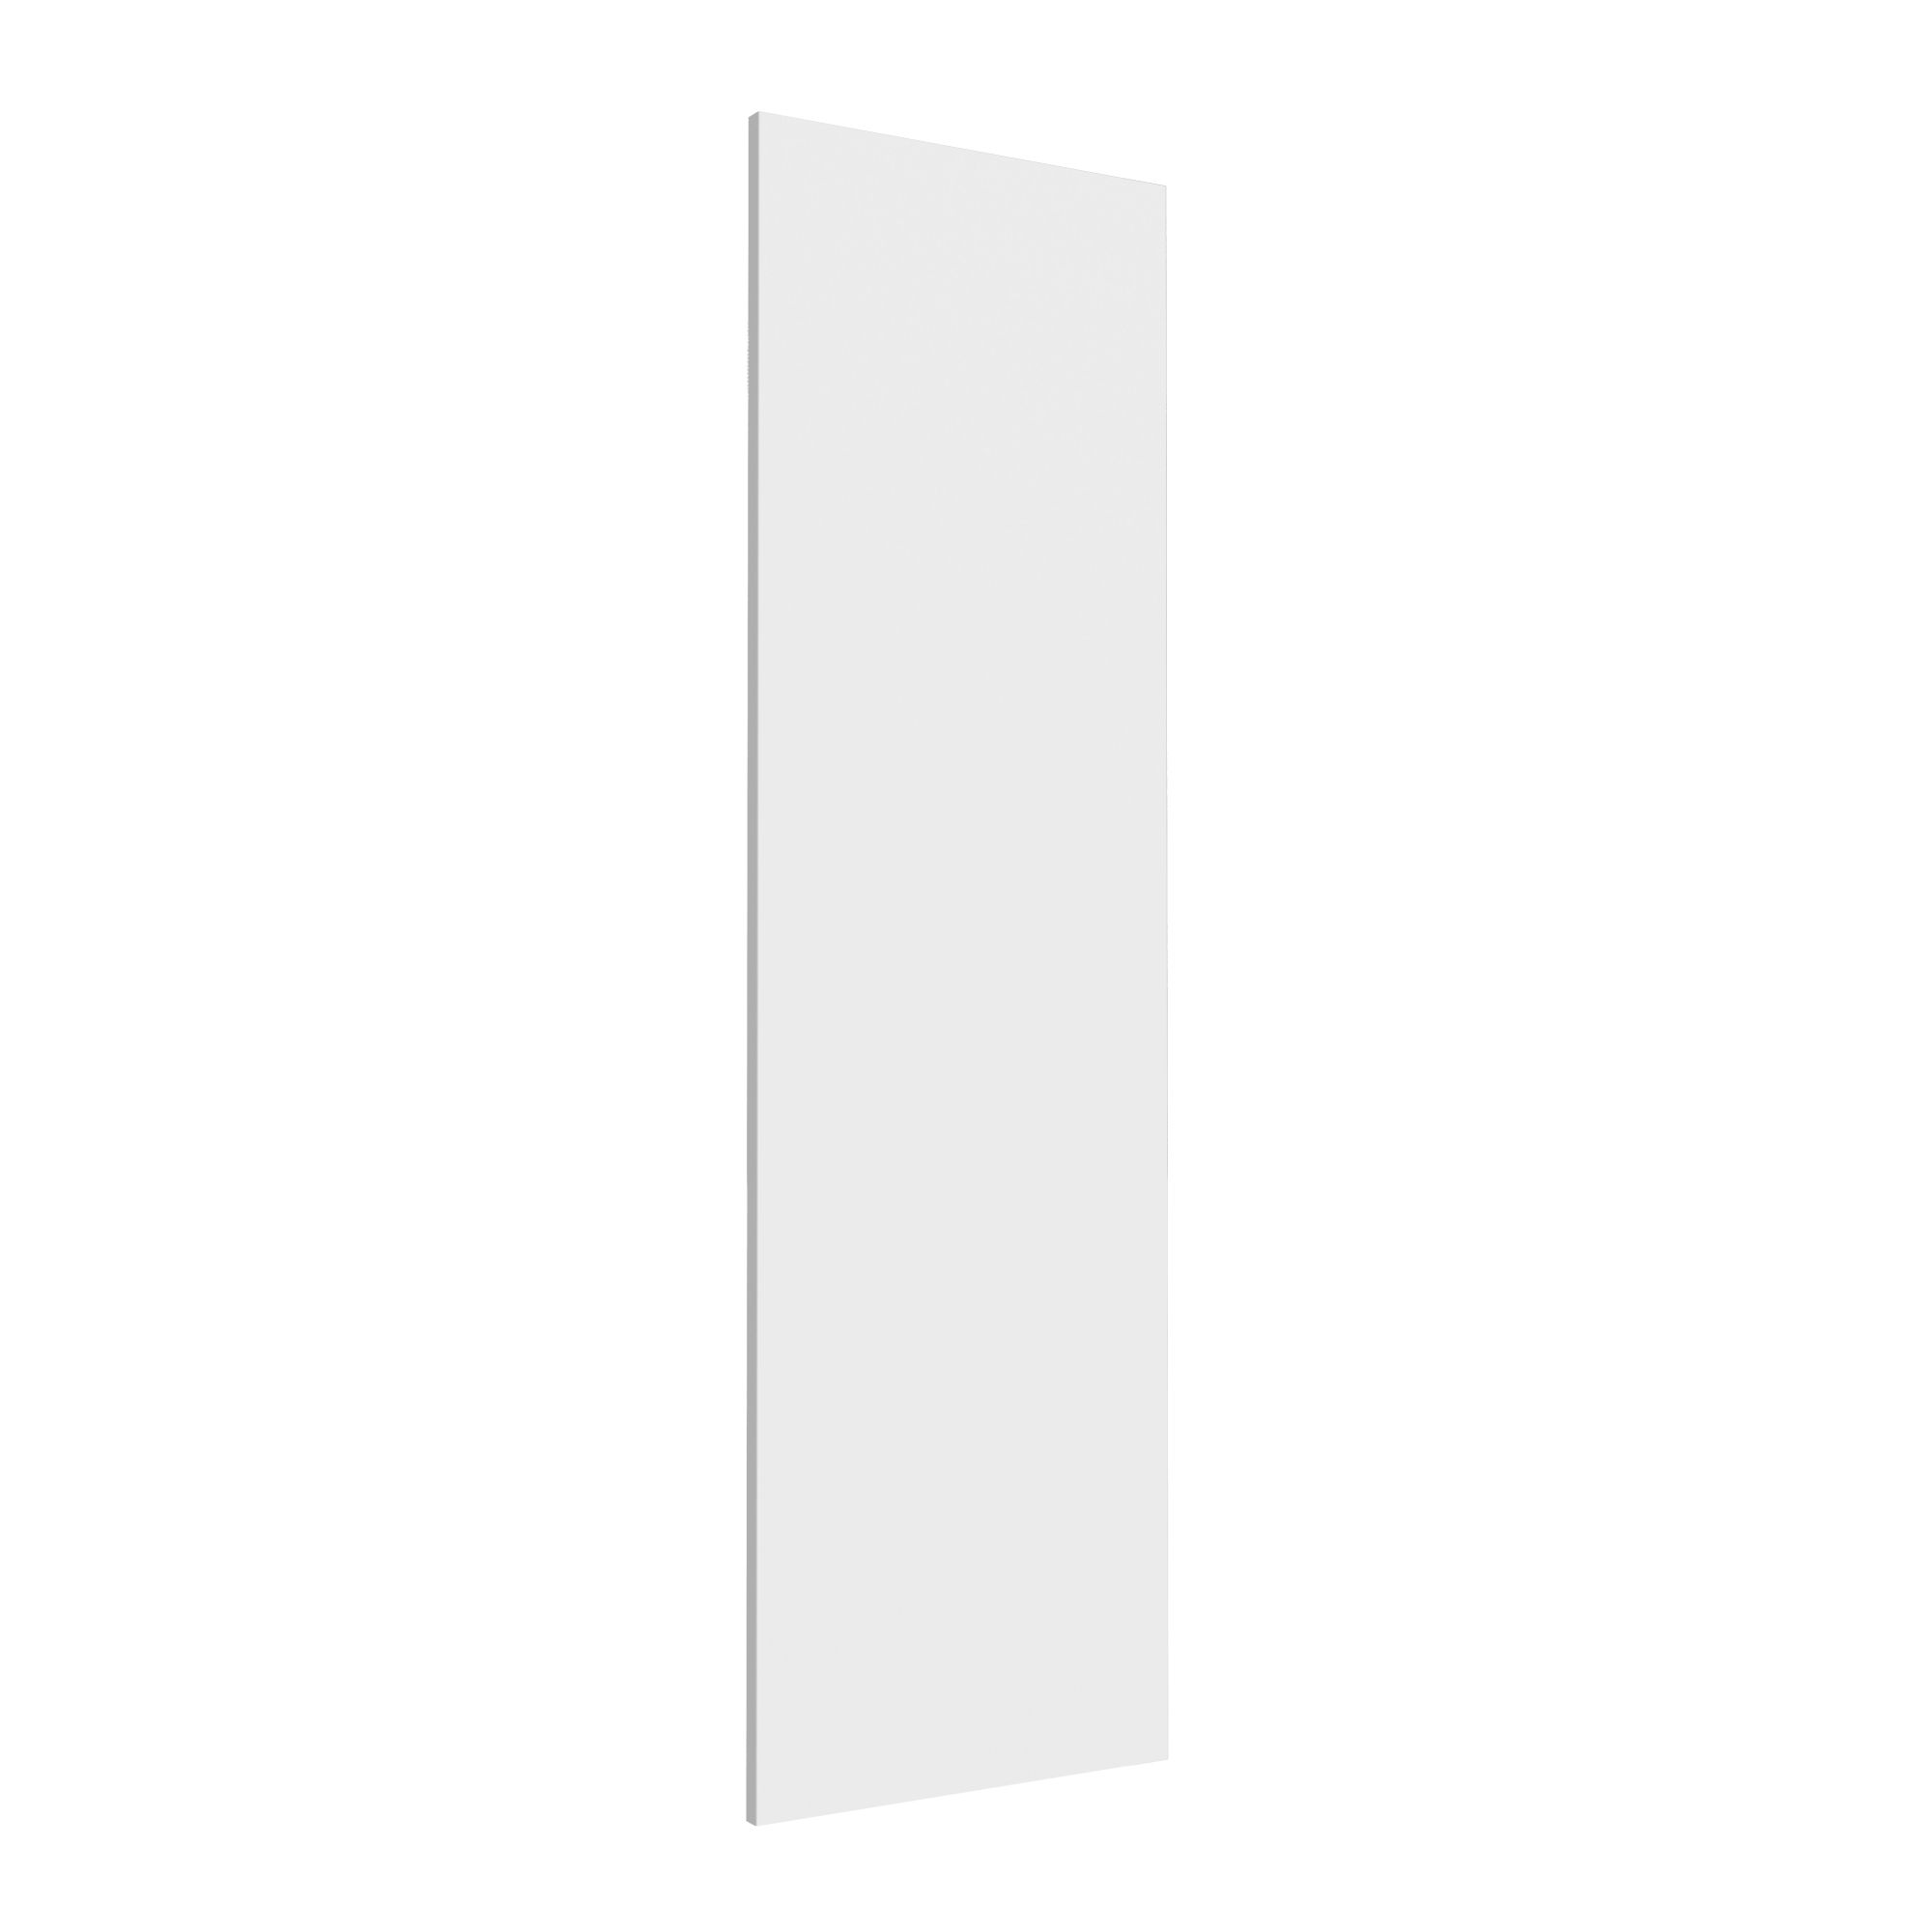 Form Darwin Modular Matt white Wardrobe door (H)1456mm (W)497mm